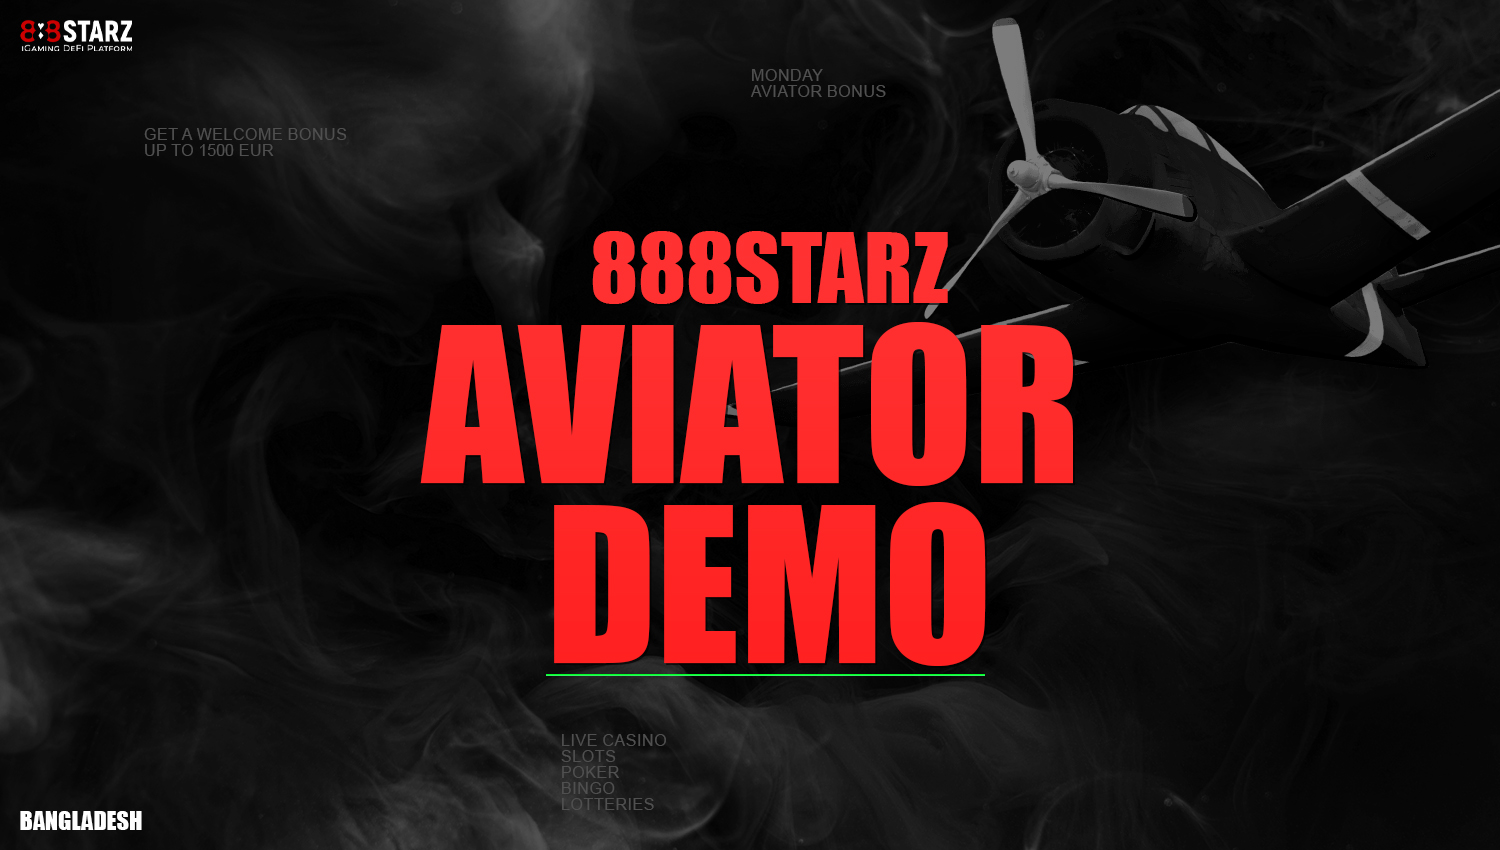 Demo version of the Aviator game at 888starz Bangladesh